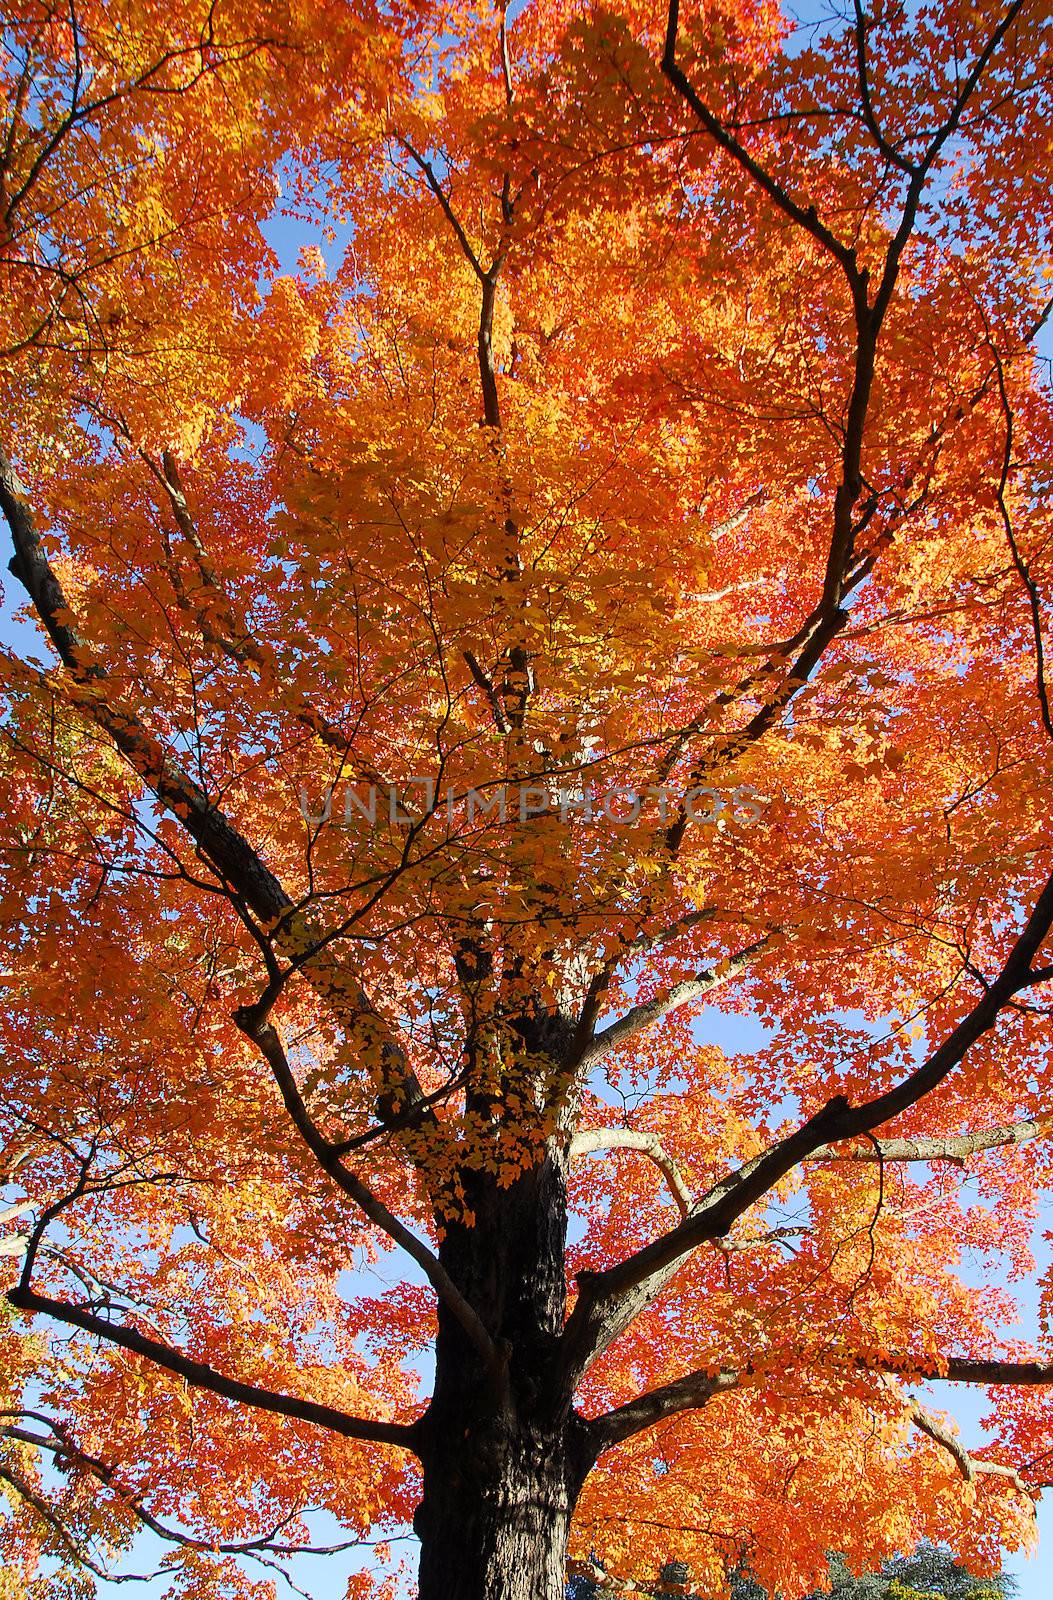 Orange Maple Tree Fall Foliage by nikonite